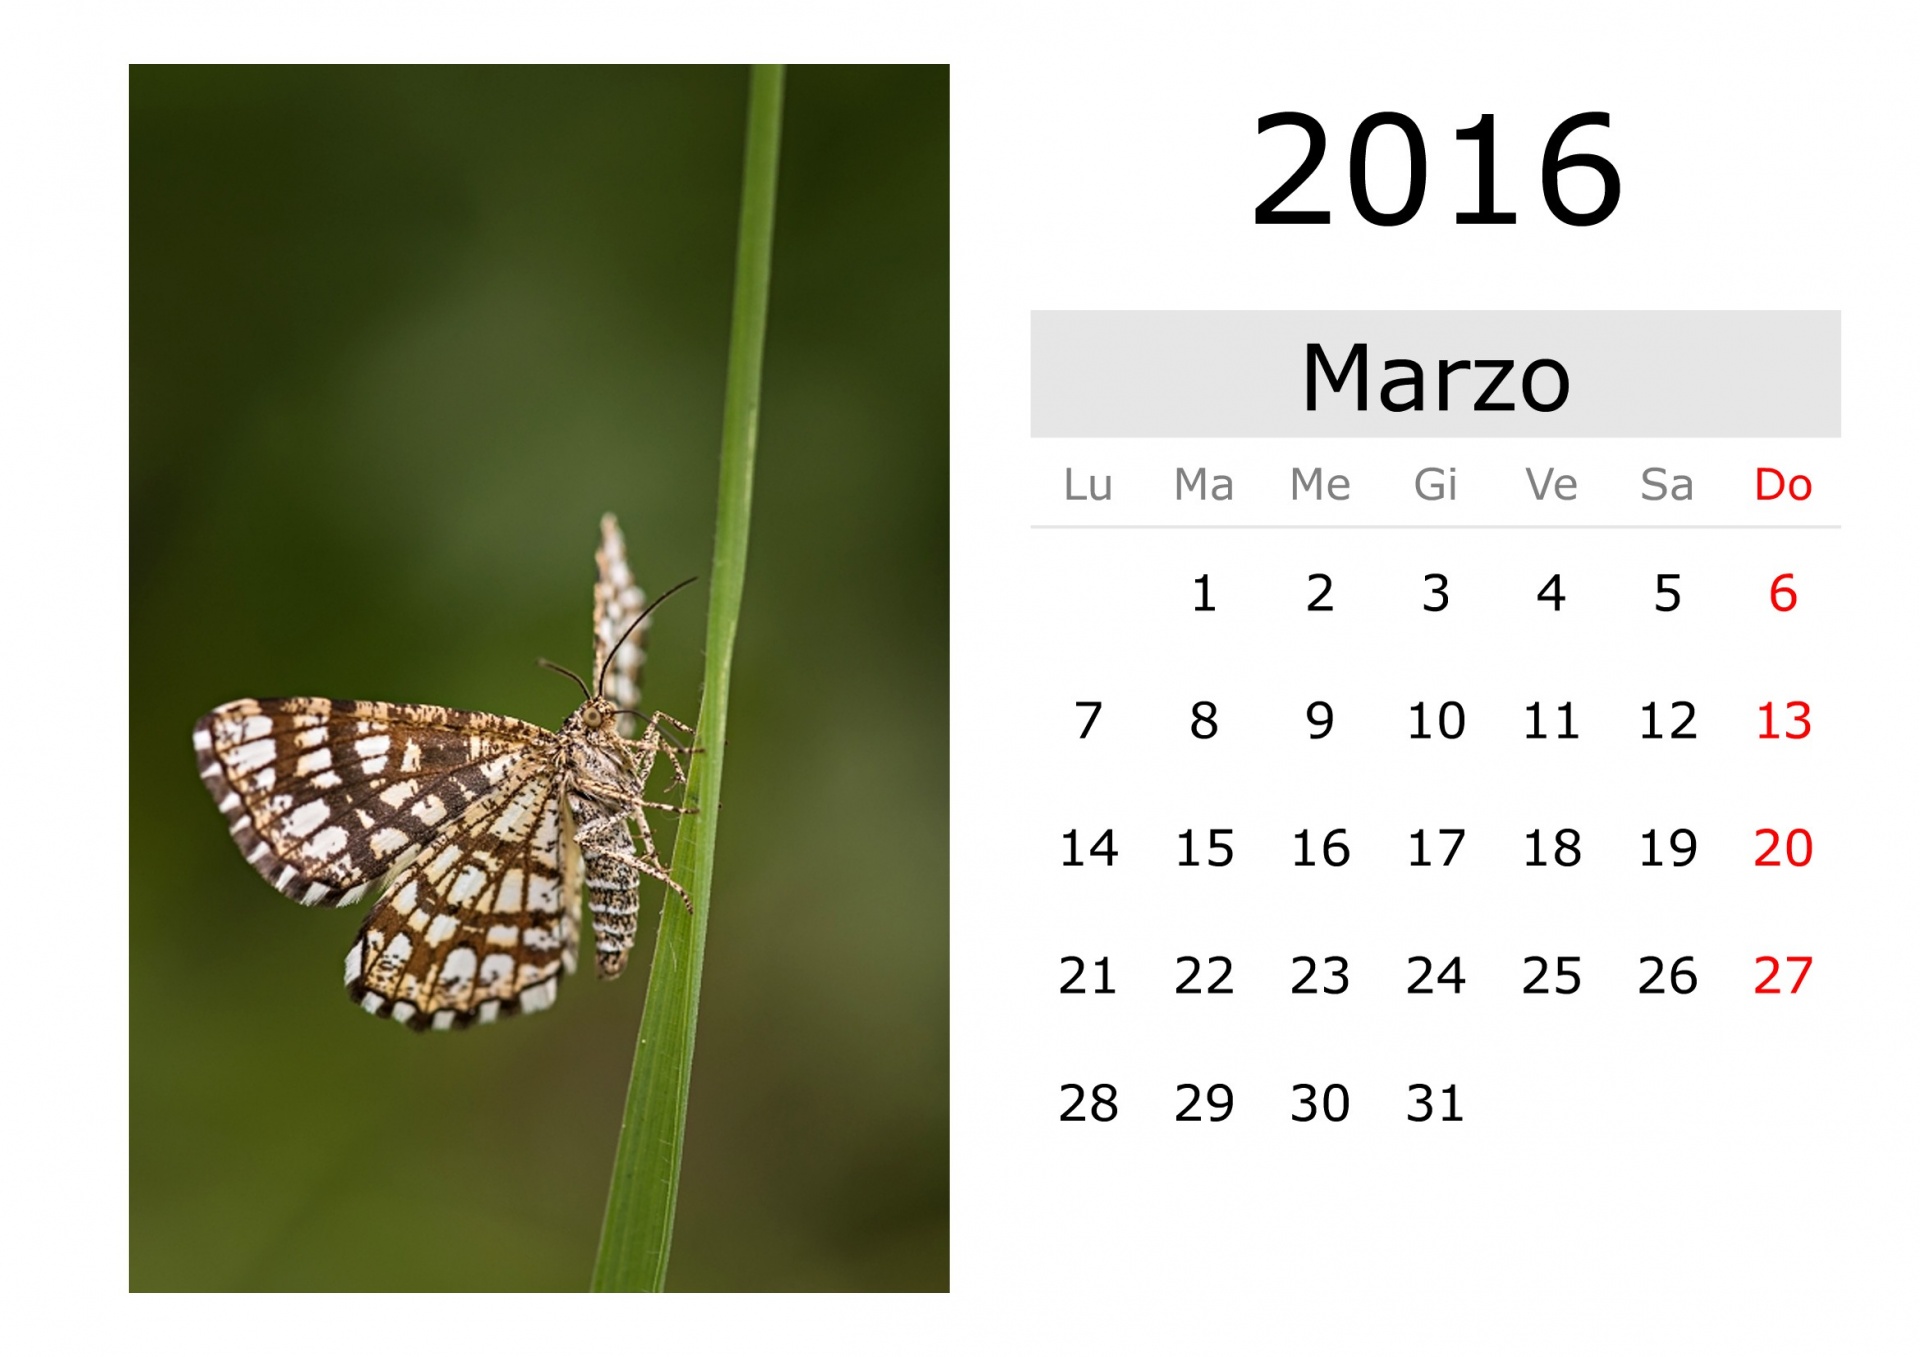 Calendar - March 2016 (Italian)